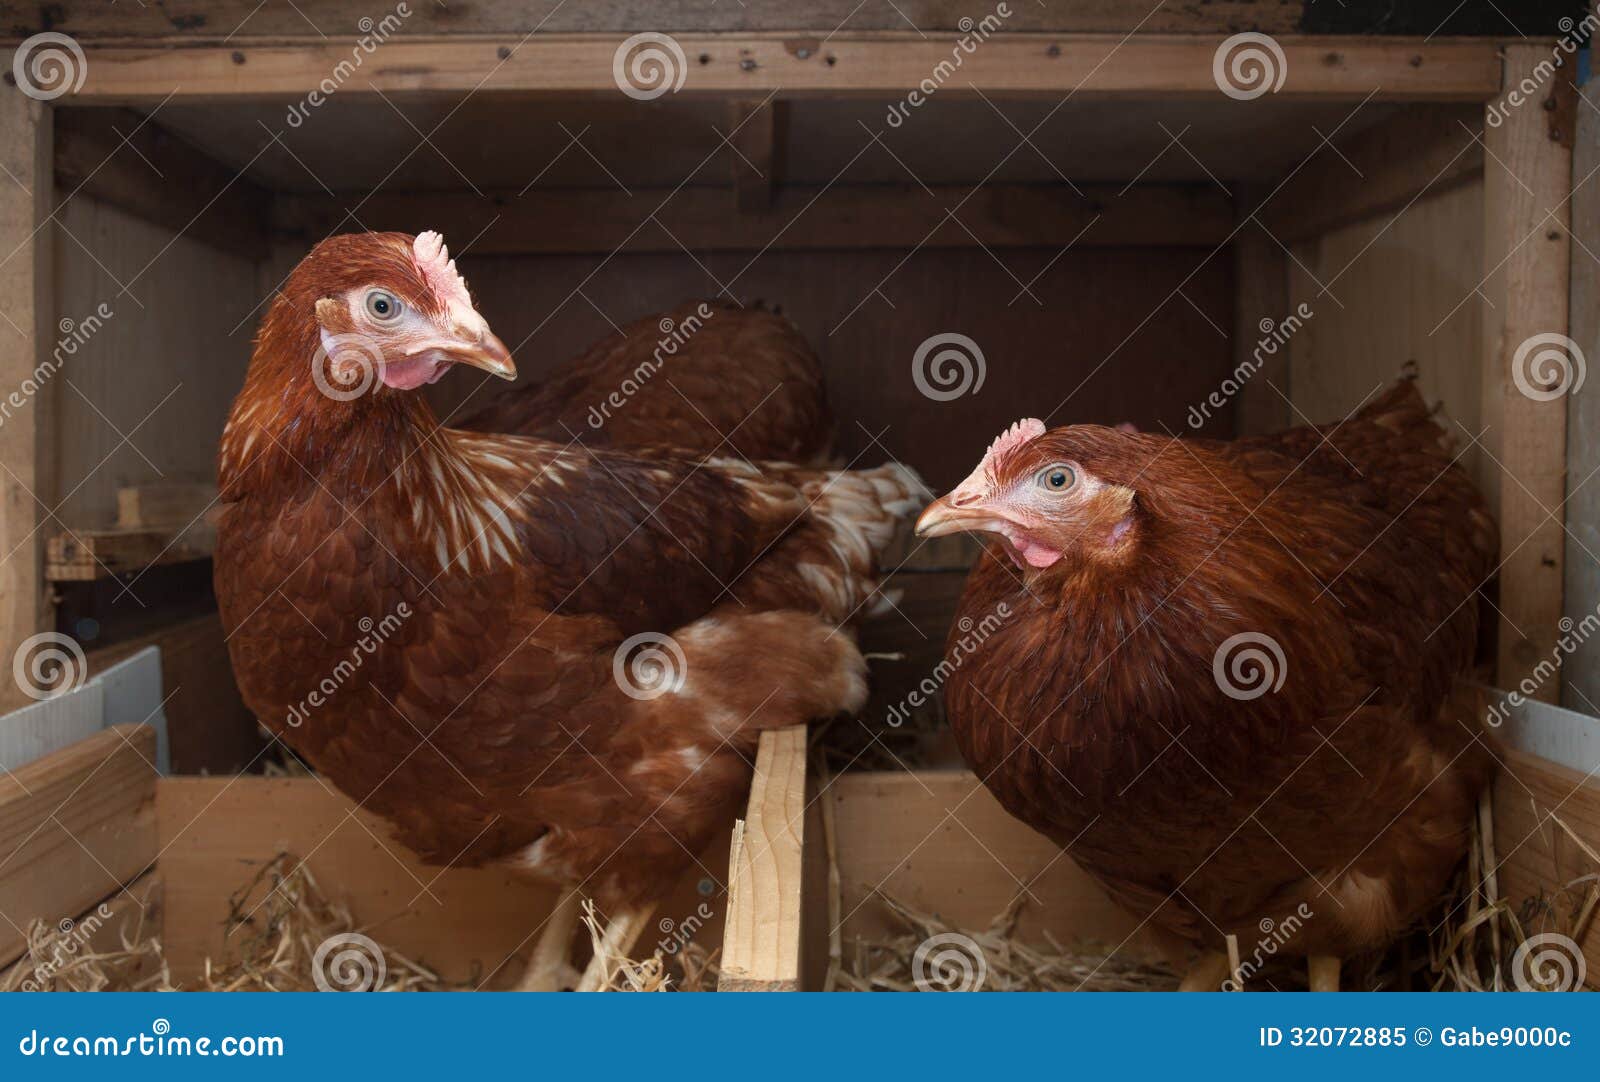 Royalty Free Stock Photo: Free range farm hens